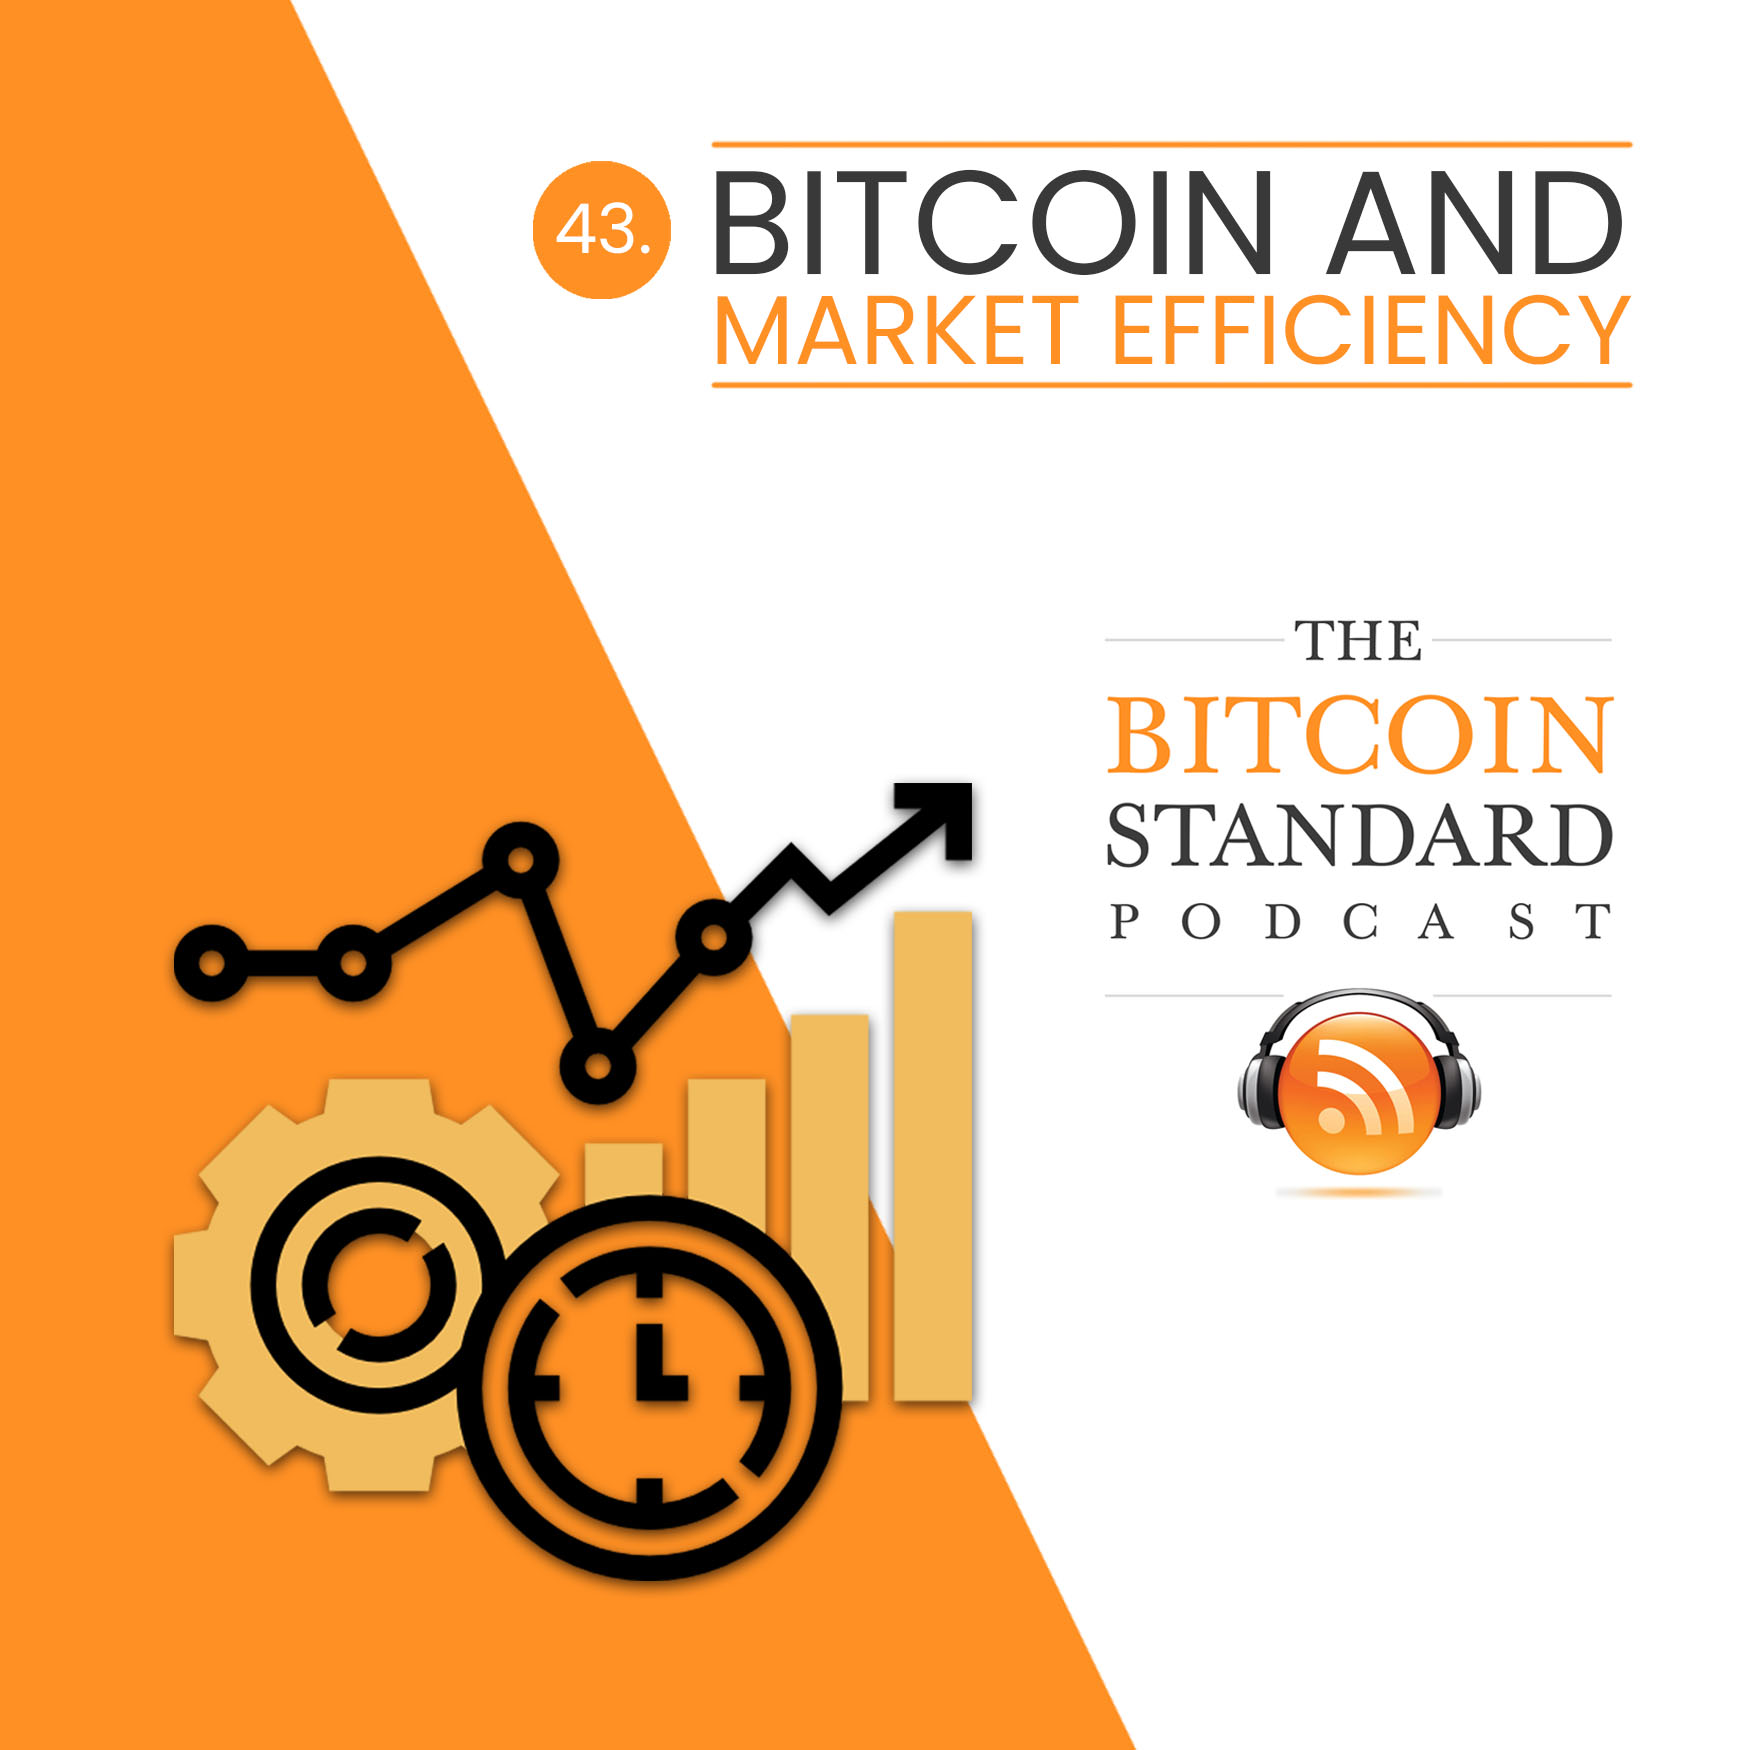 43. Bitcoin and market efficiency